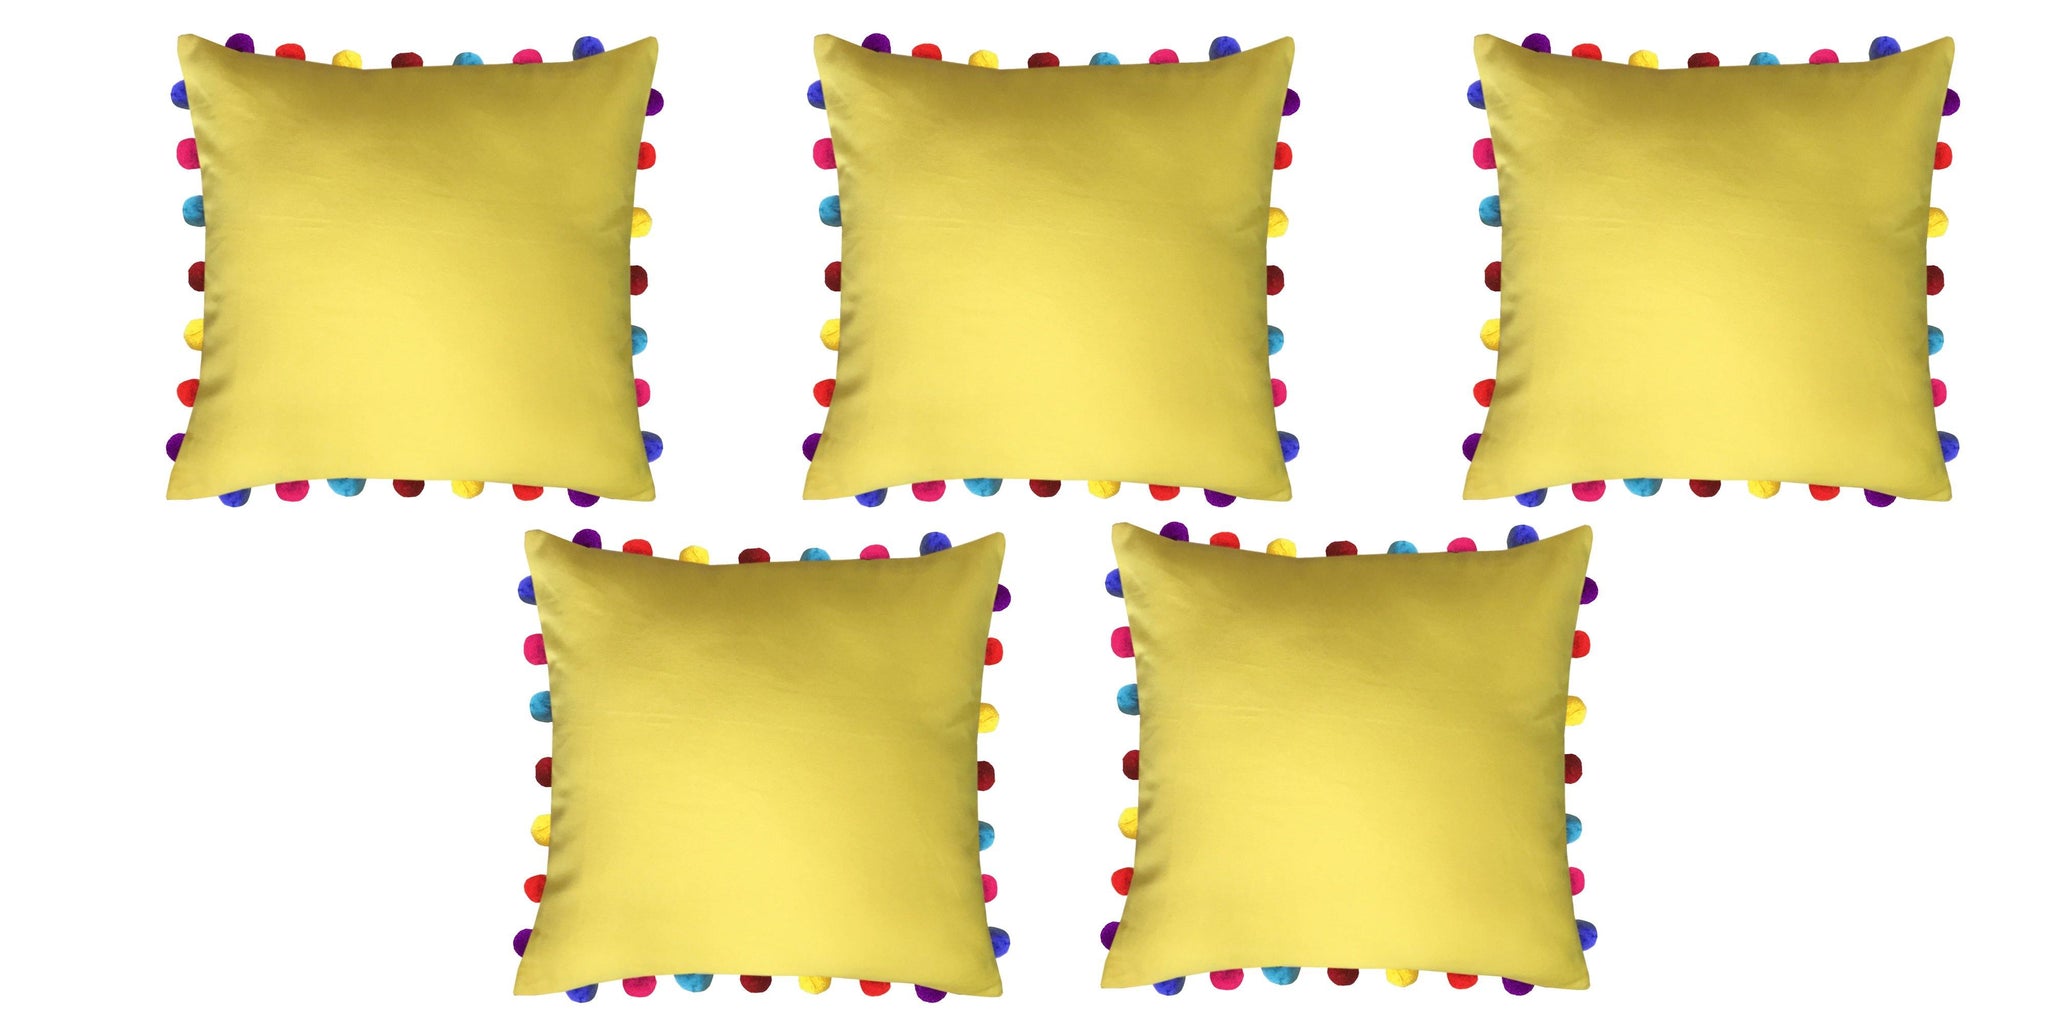 Lushomes Lemon Chrome Cushion Cover with Colorful Pom Poms (5 pcs, 20 x 20”) - Lushomes